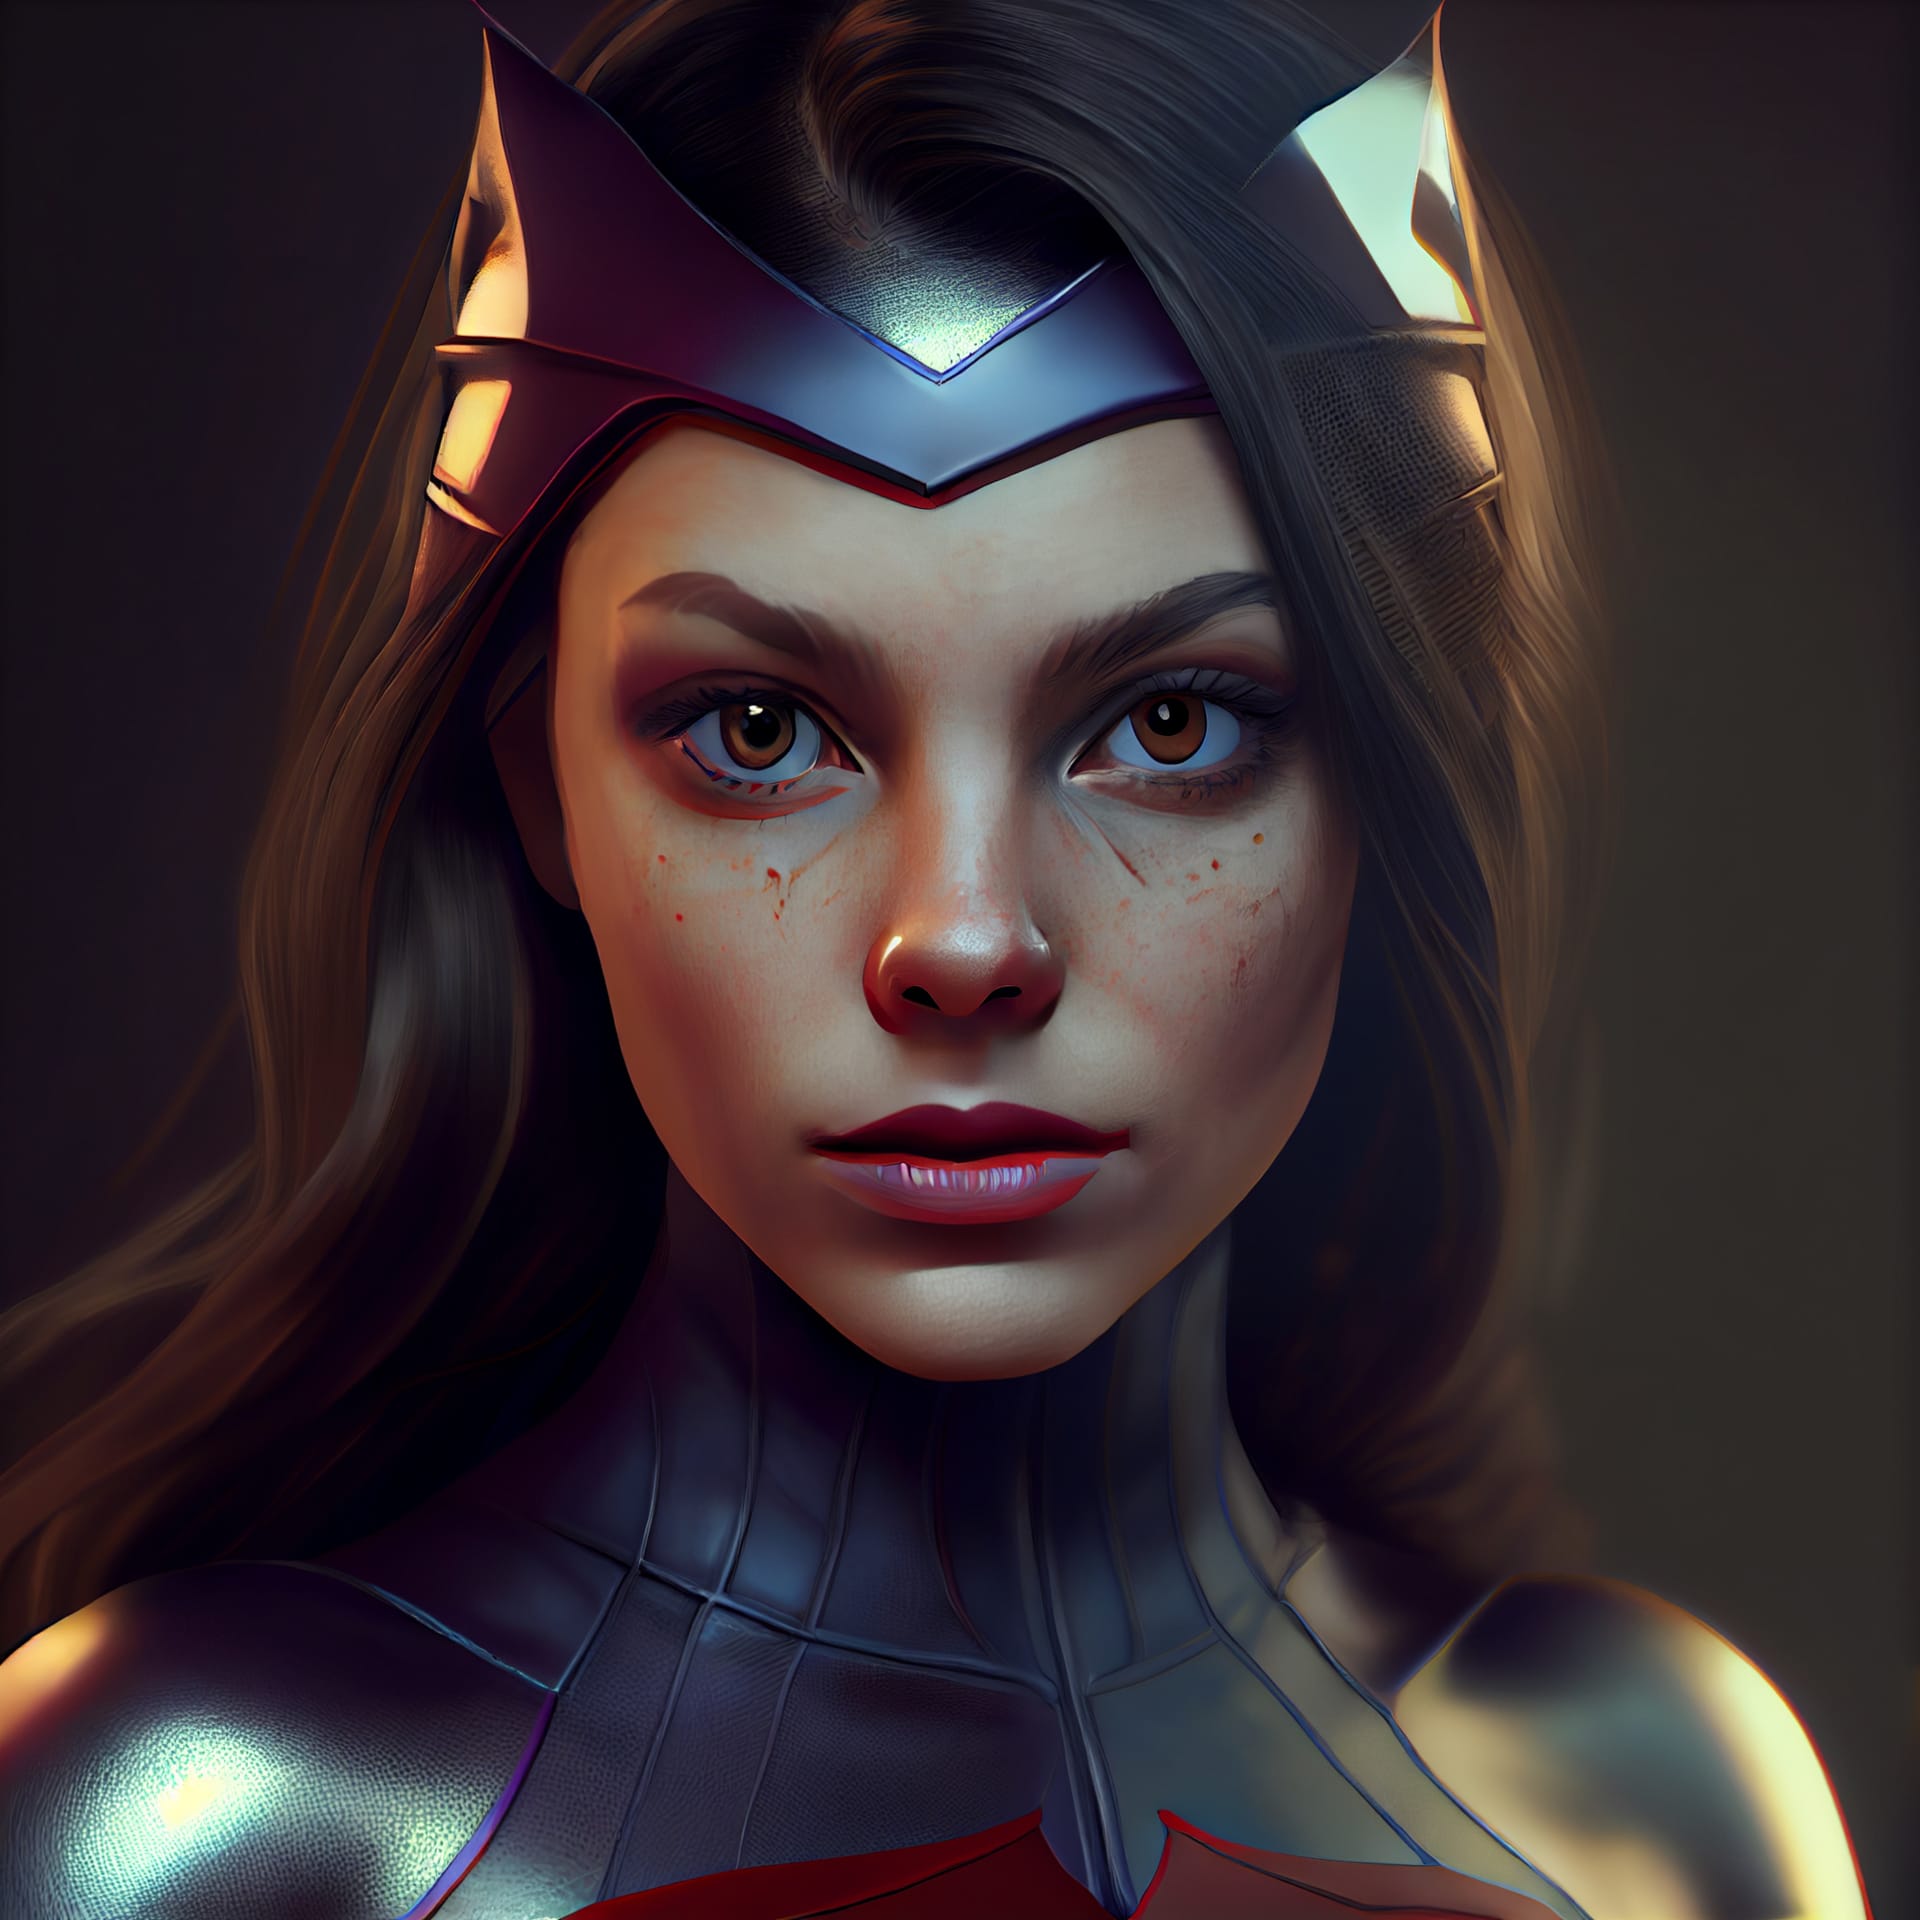 Superheroine woman portrait with superpowers 3d render illustration nice image